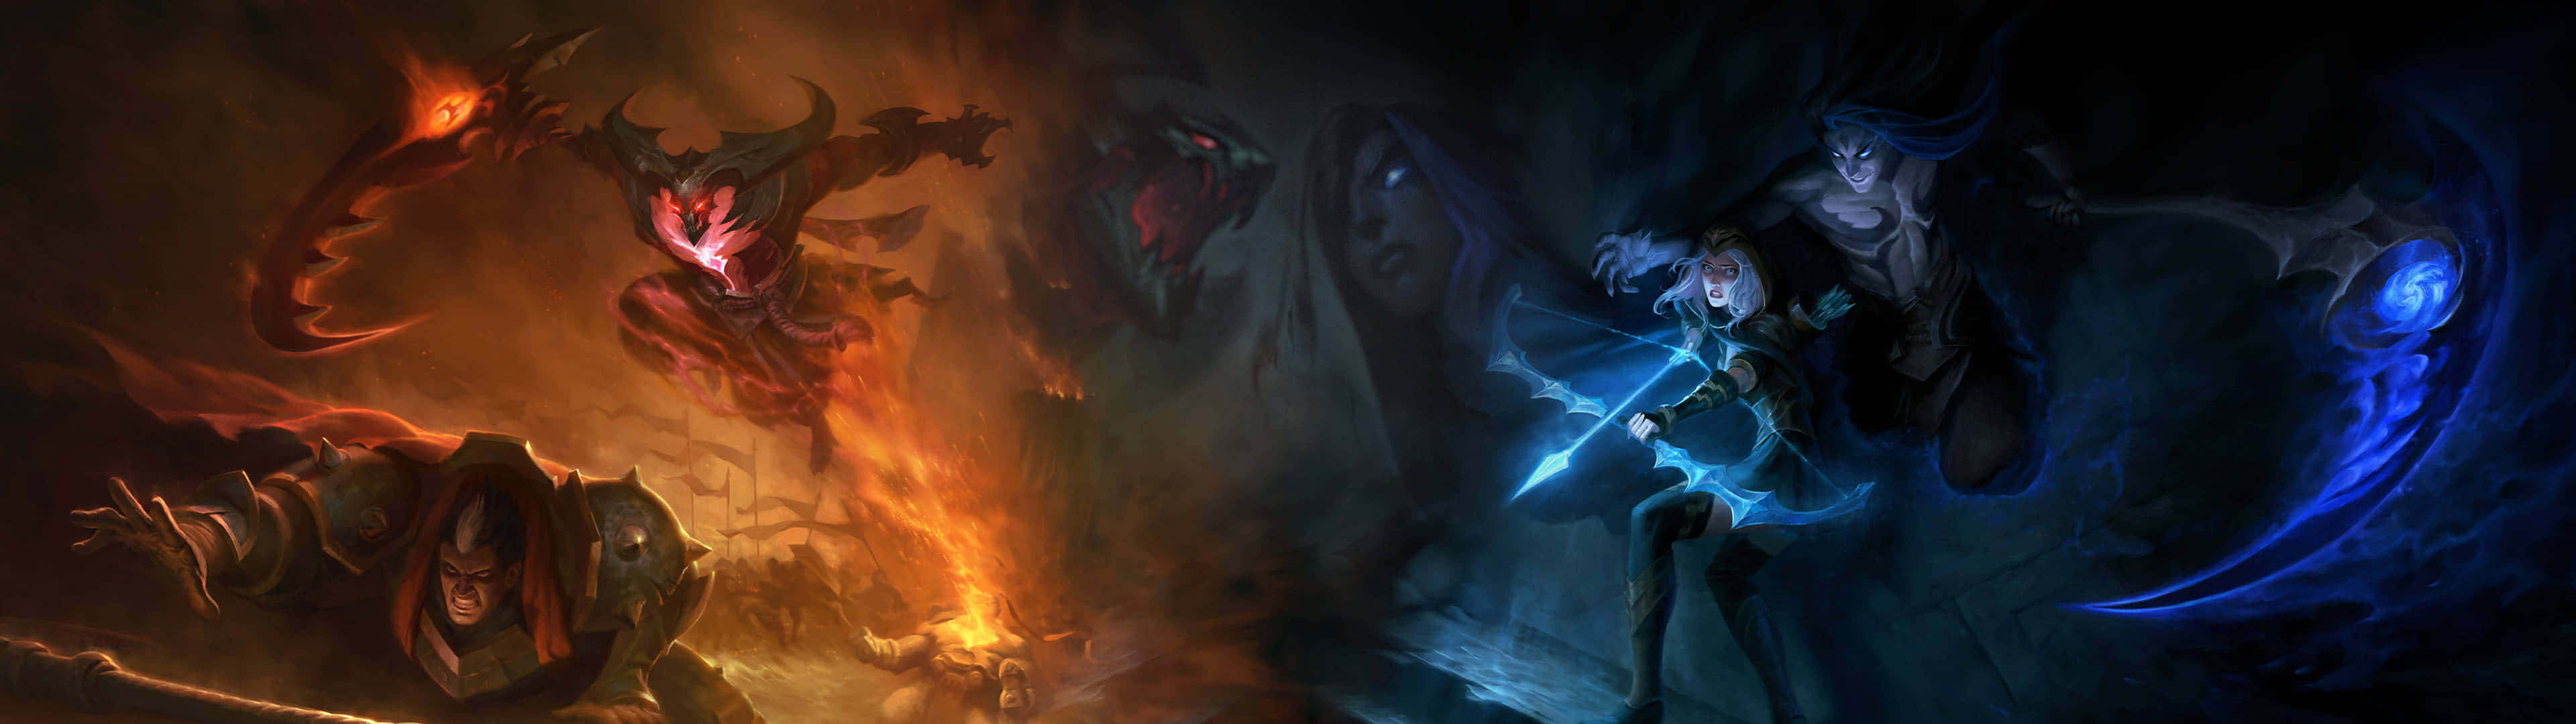 Erobranexus Med League Of Legends På Dual Screen. Wallpaper